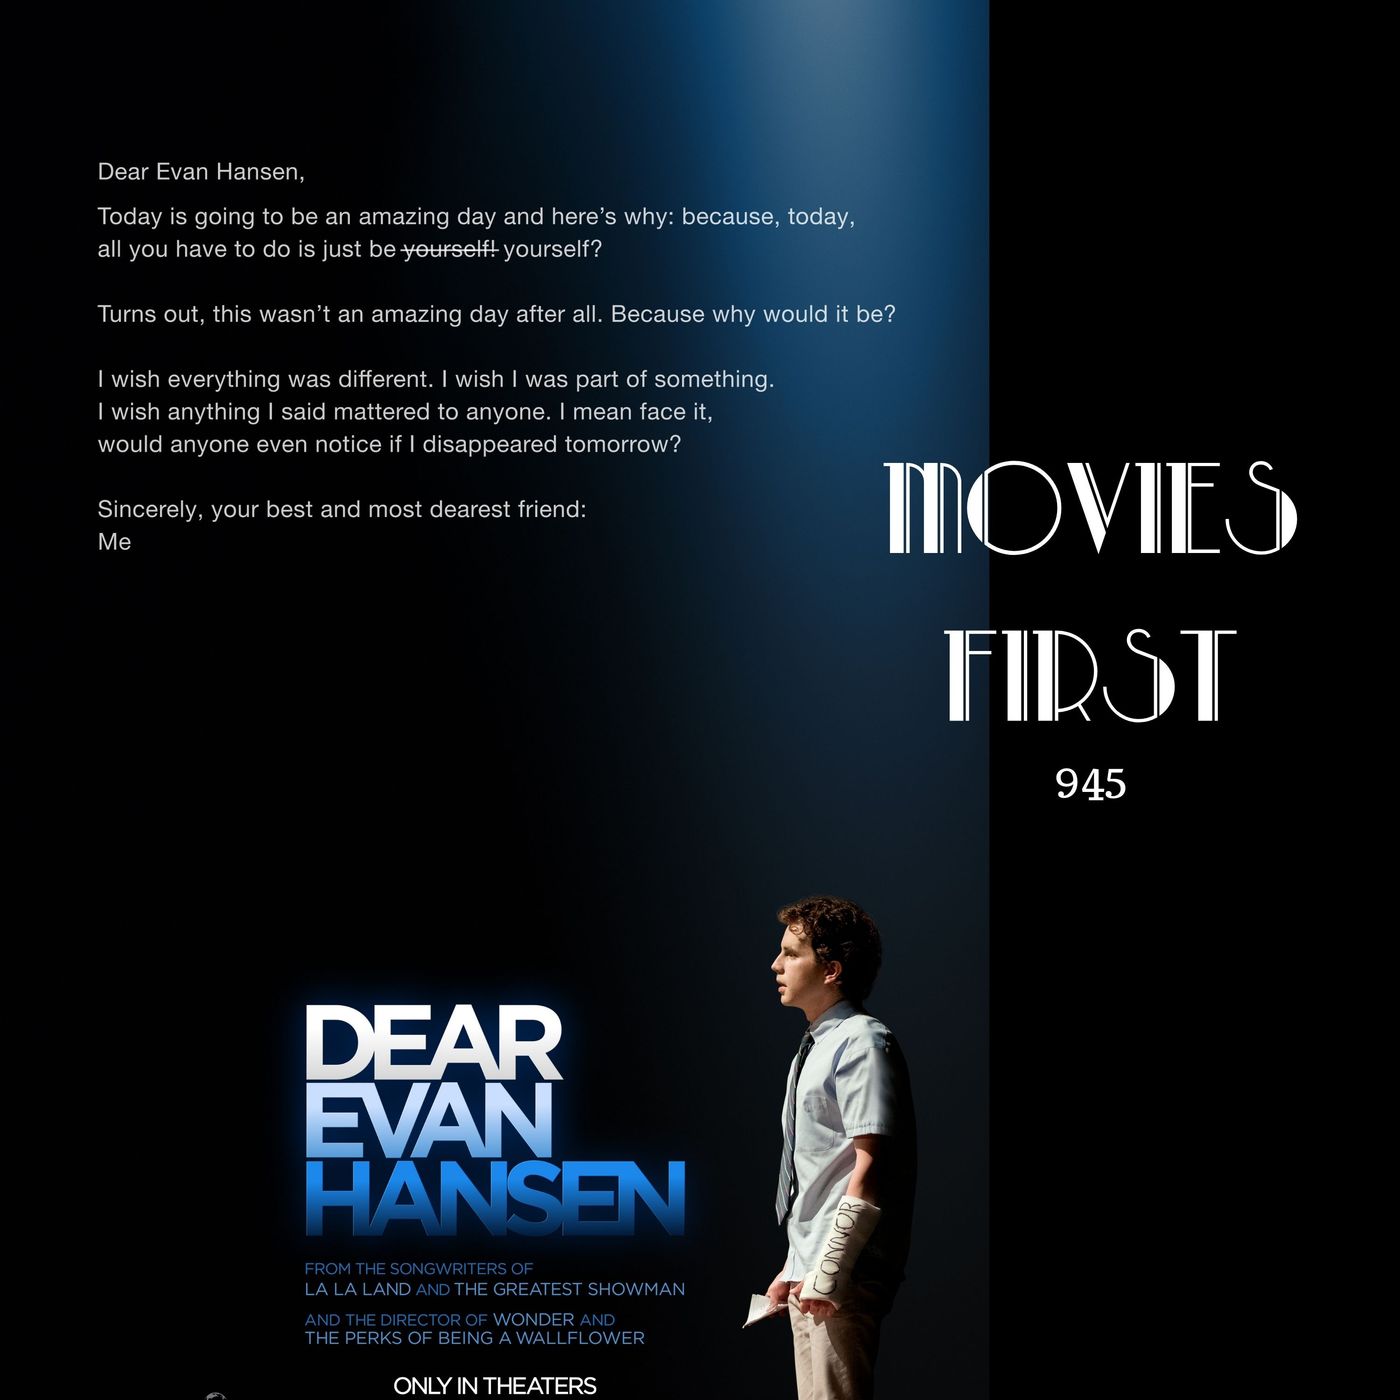 Dear Evan Hansen (Drama, Musical) (the @MoviesFirst review)